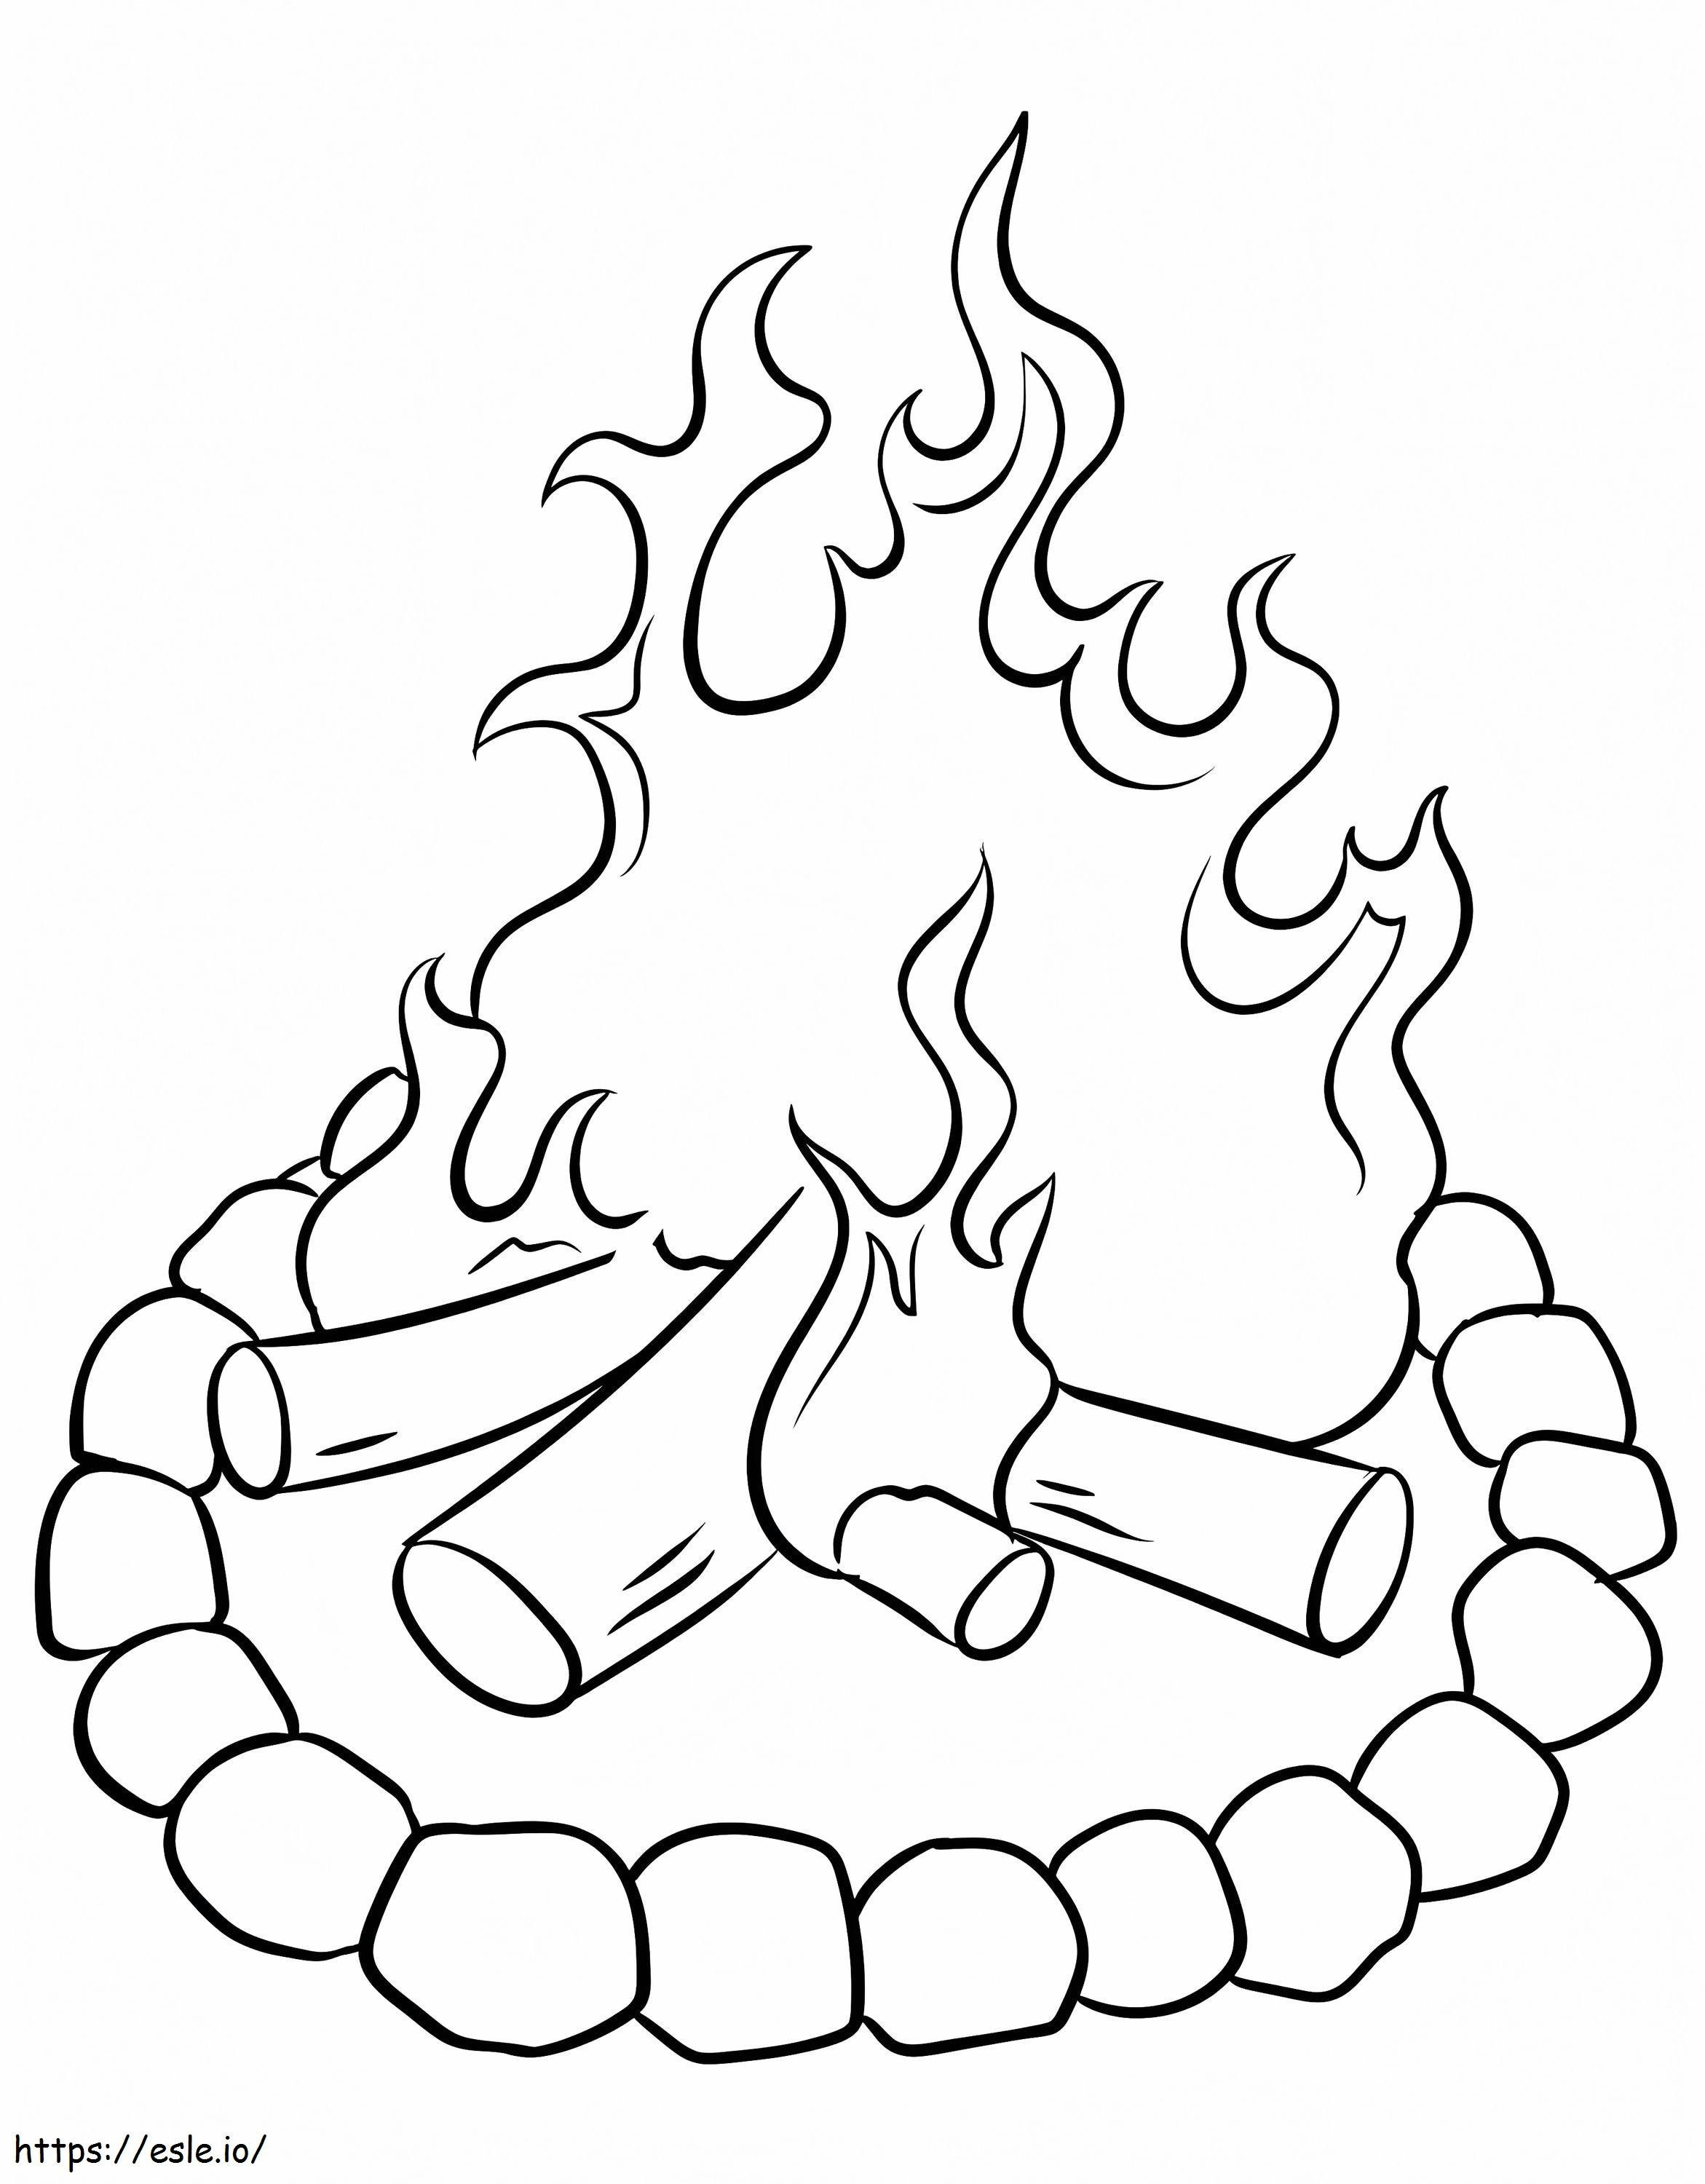 Normal Bonfire coloring page